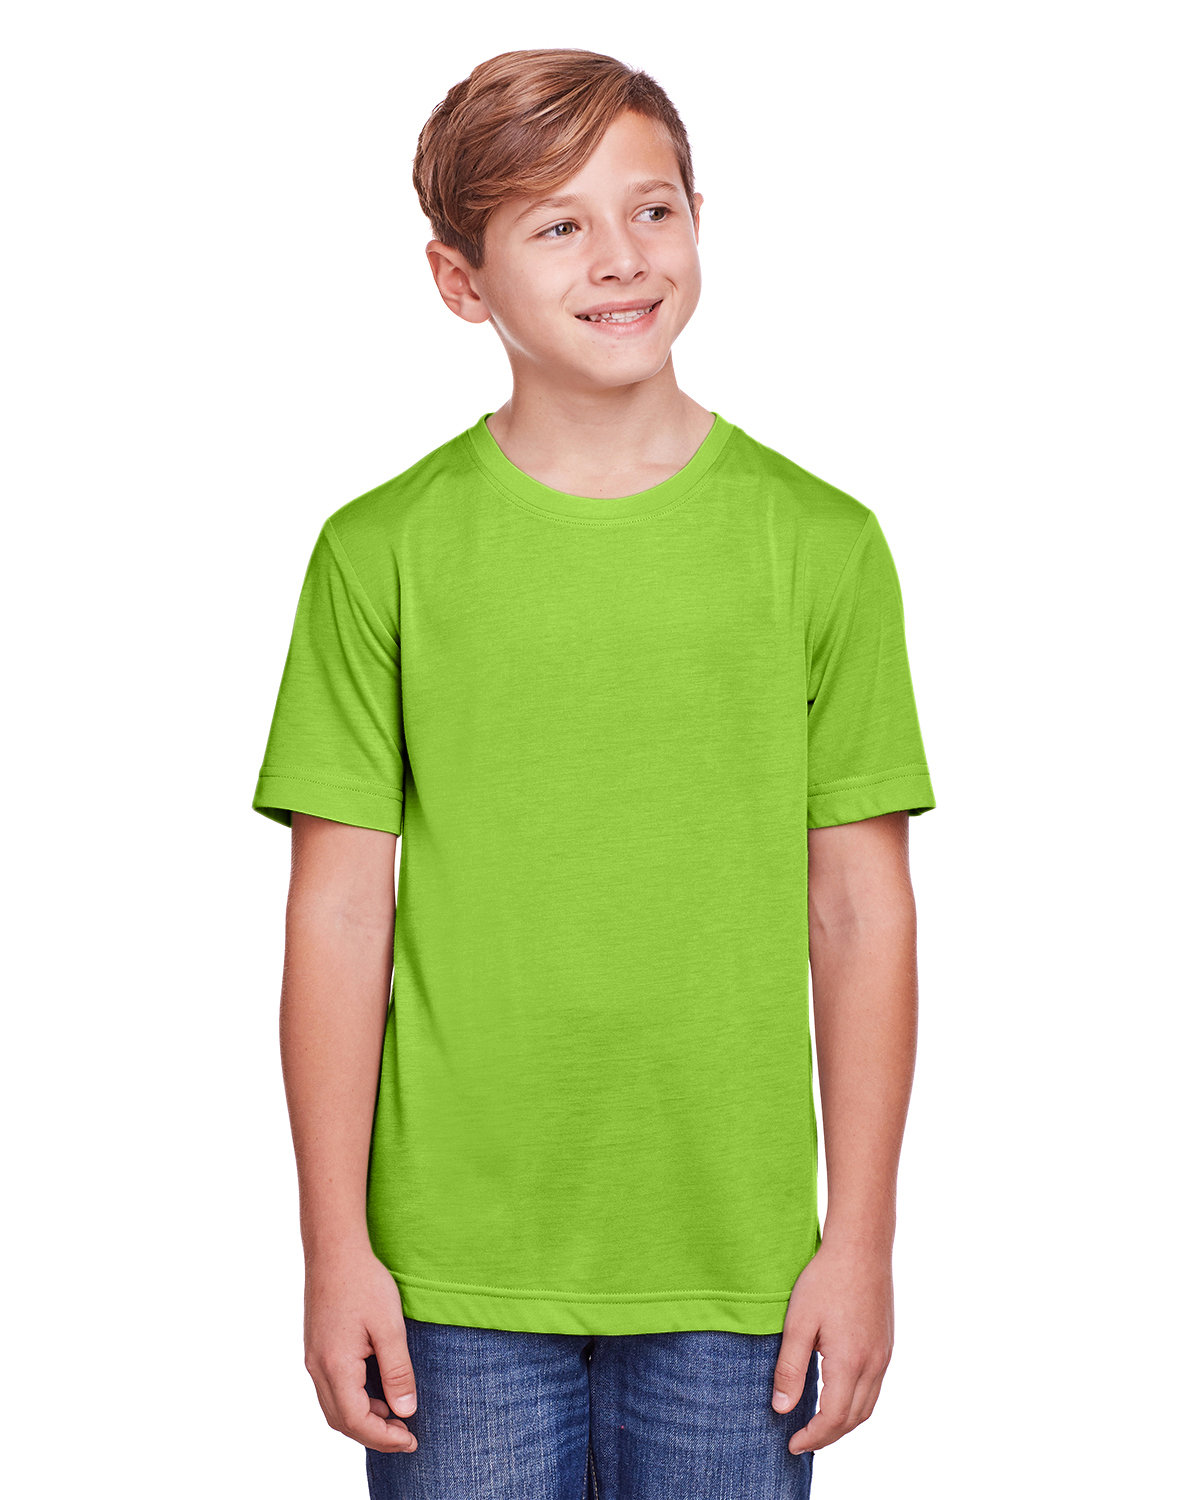 Core 365 Youth Fusion ChromaSoft Performance T-Shirt ACID GREEN 